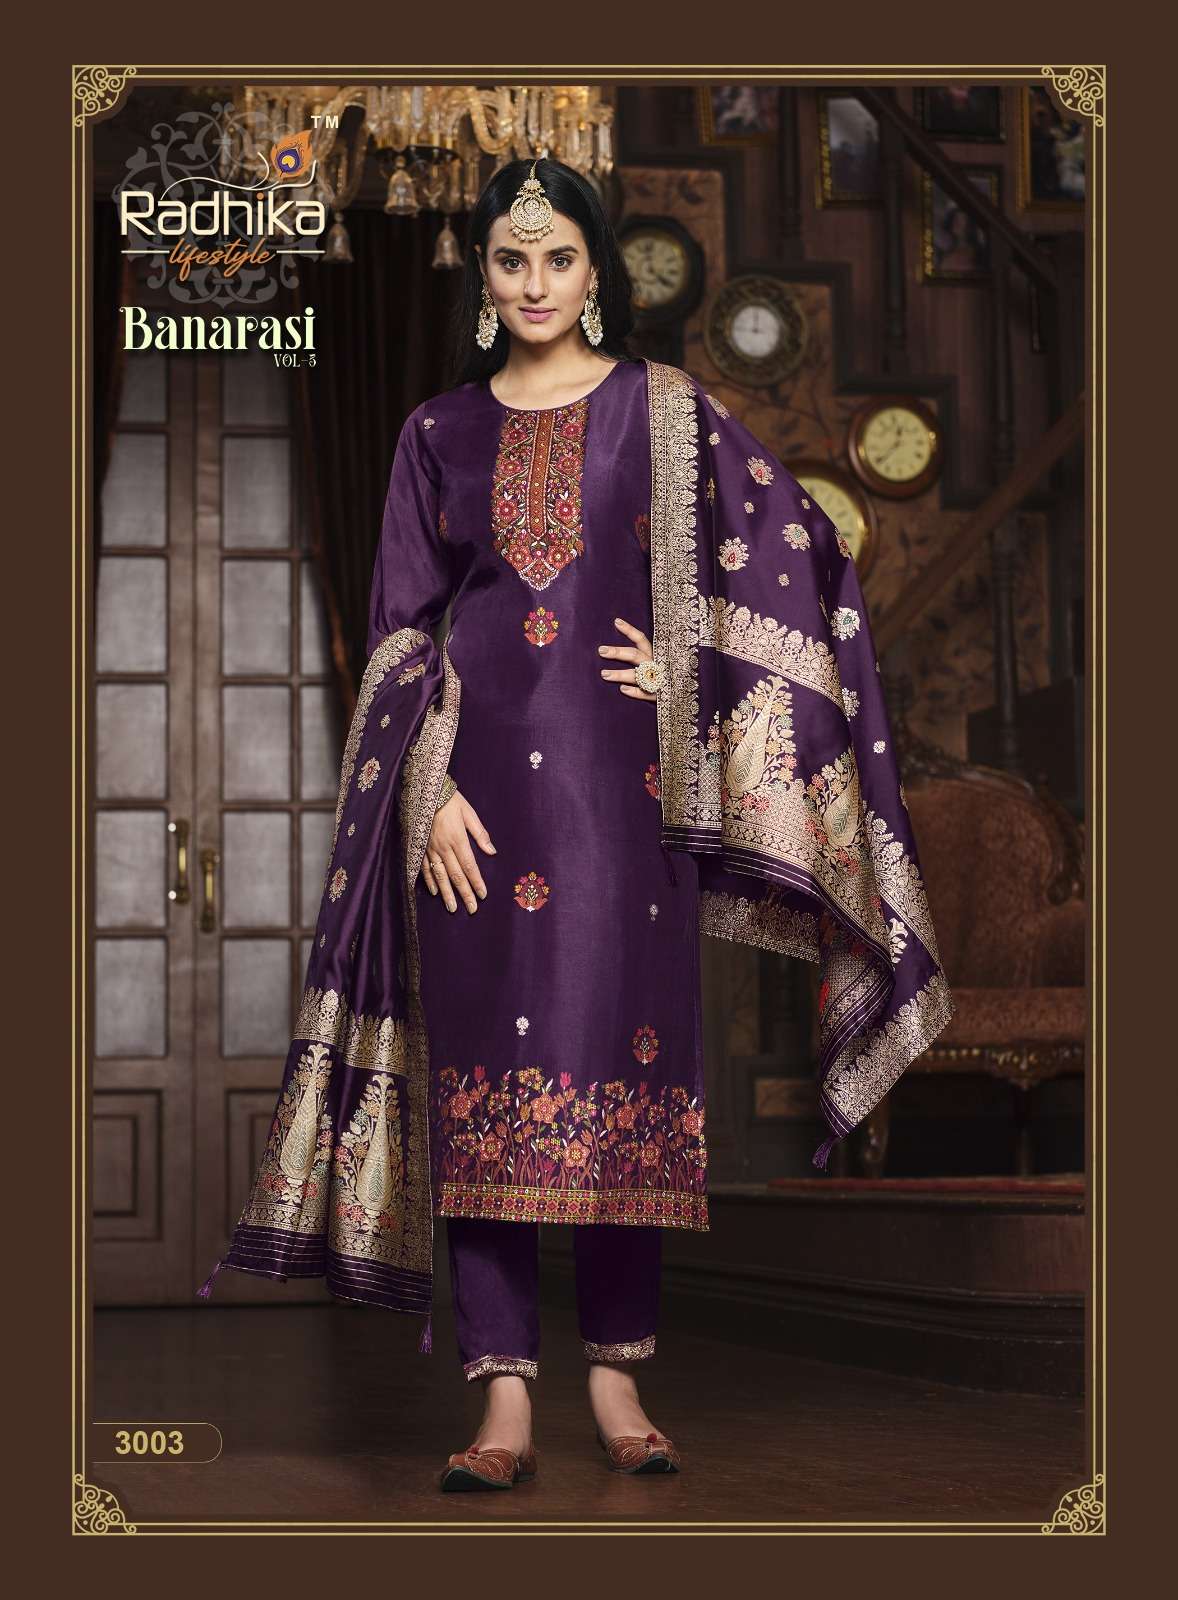 radhika lifestyle banarasi vol-3 3001-3006 series function special kurti pant with dupatta latest catalogue surat